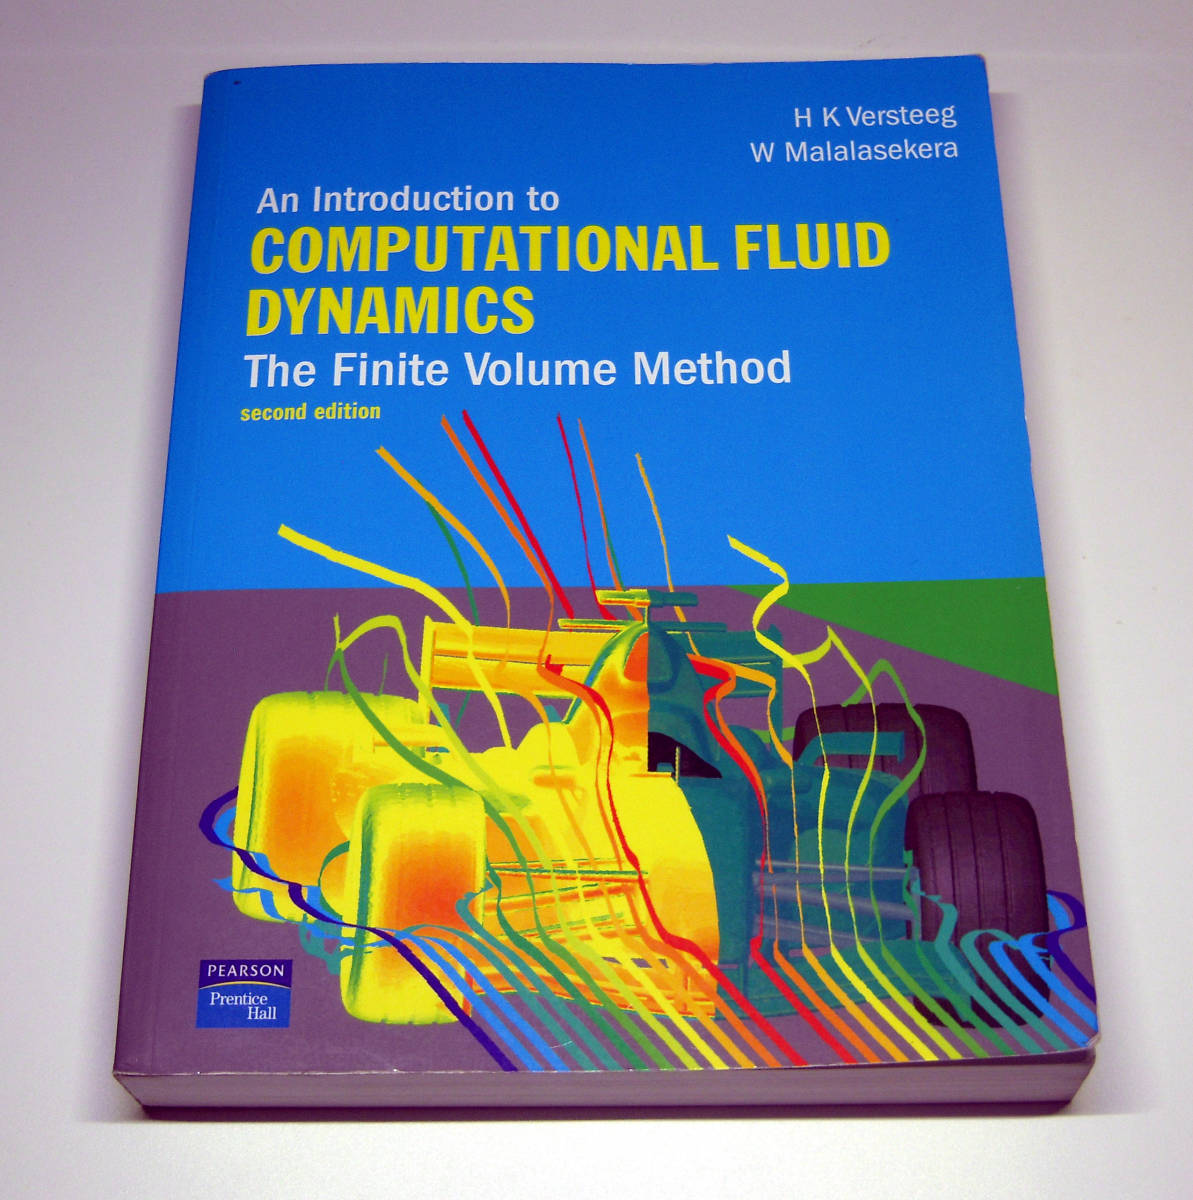 An Introduction to Computational Fluid Dynamics: The Finite Volume